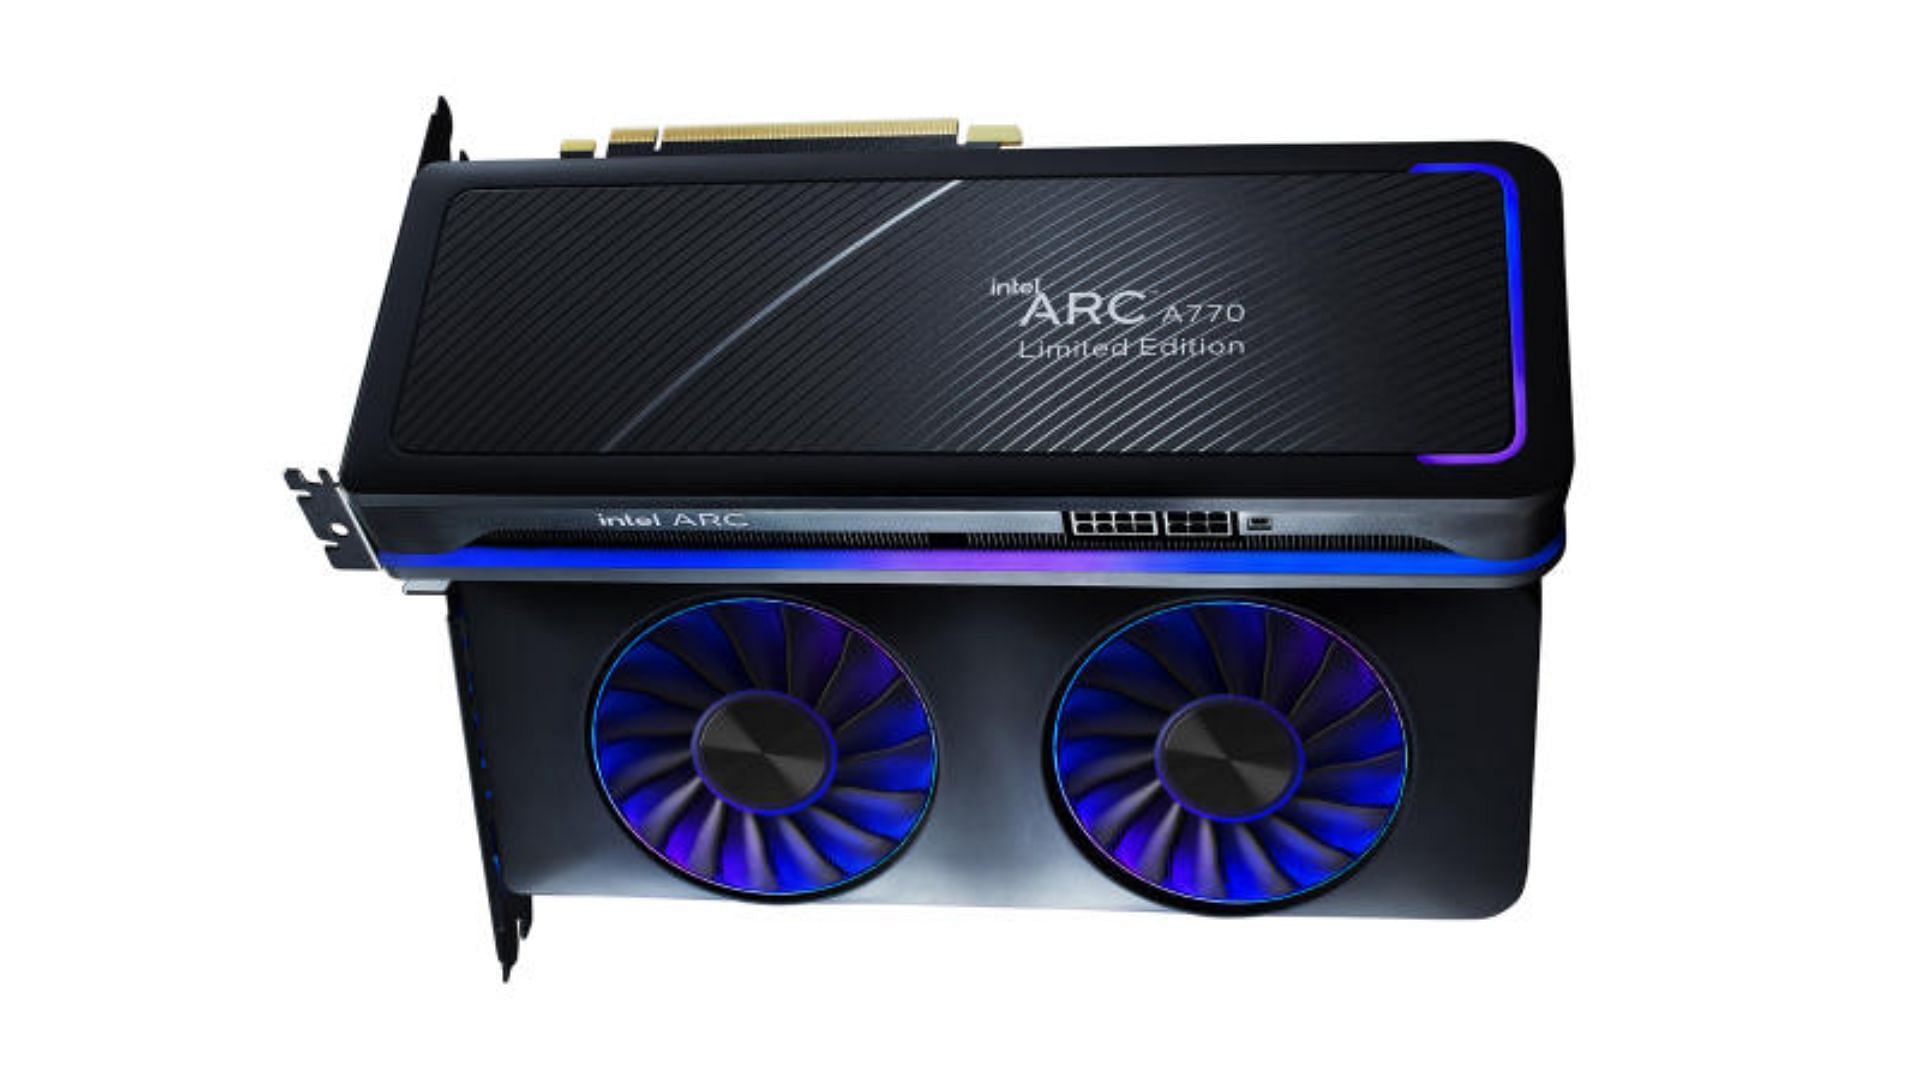 The ARC A770 Limited Edition (Image via Intel)